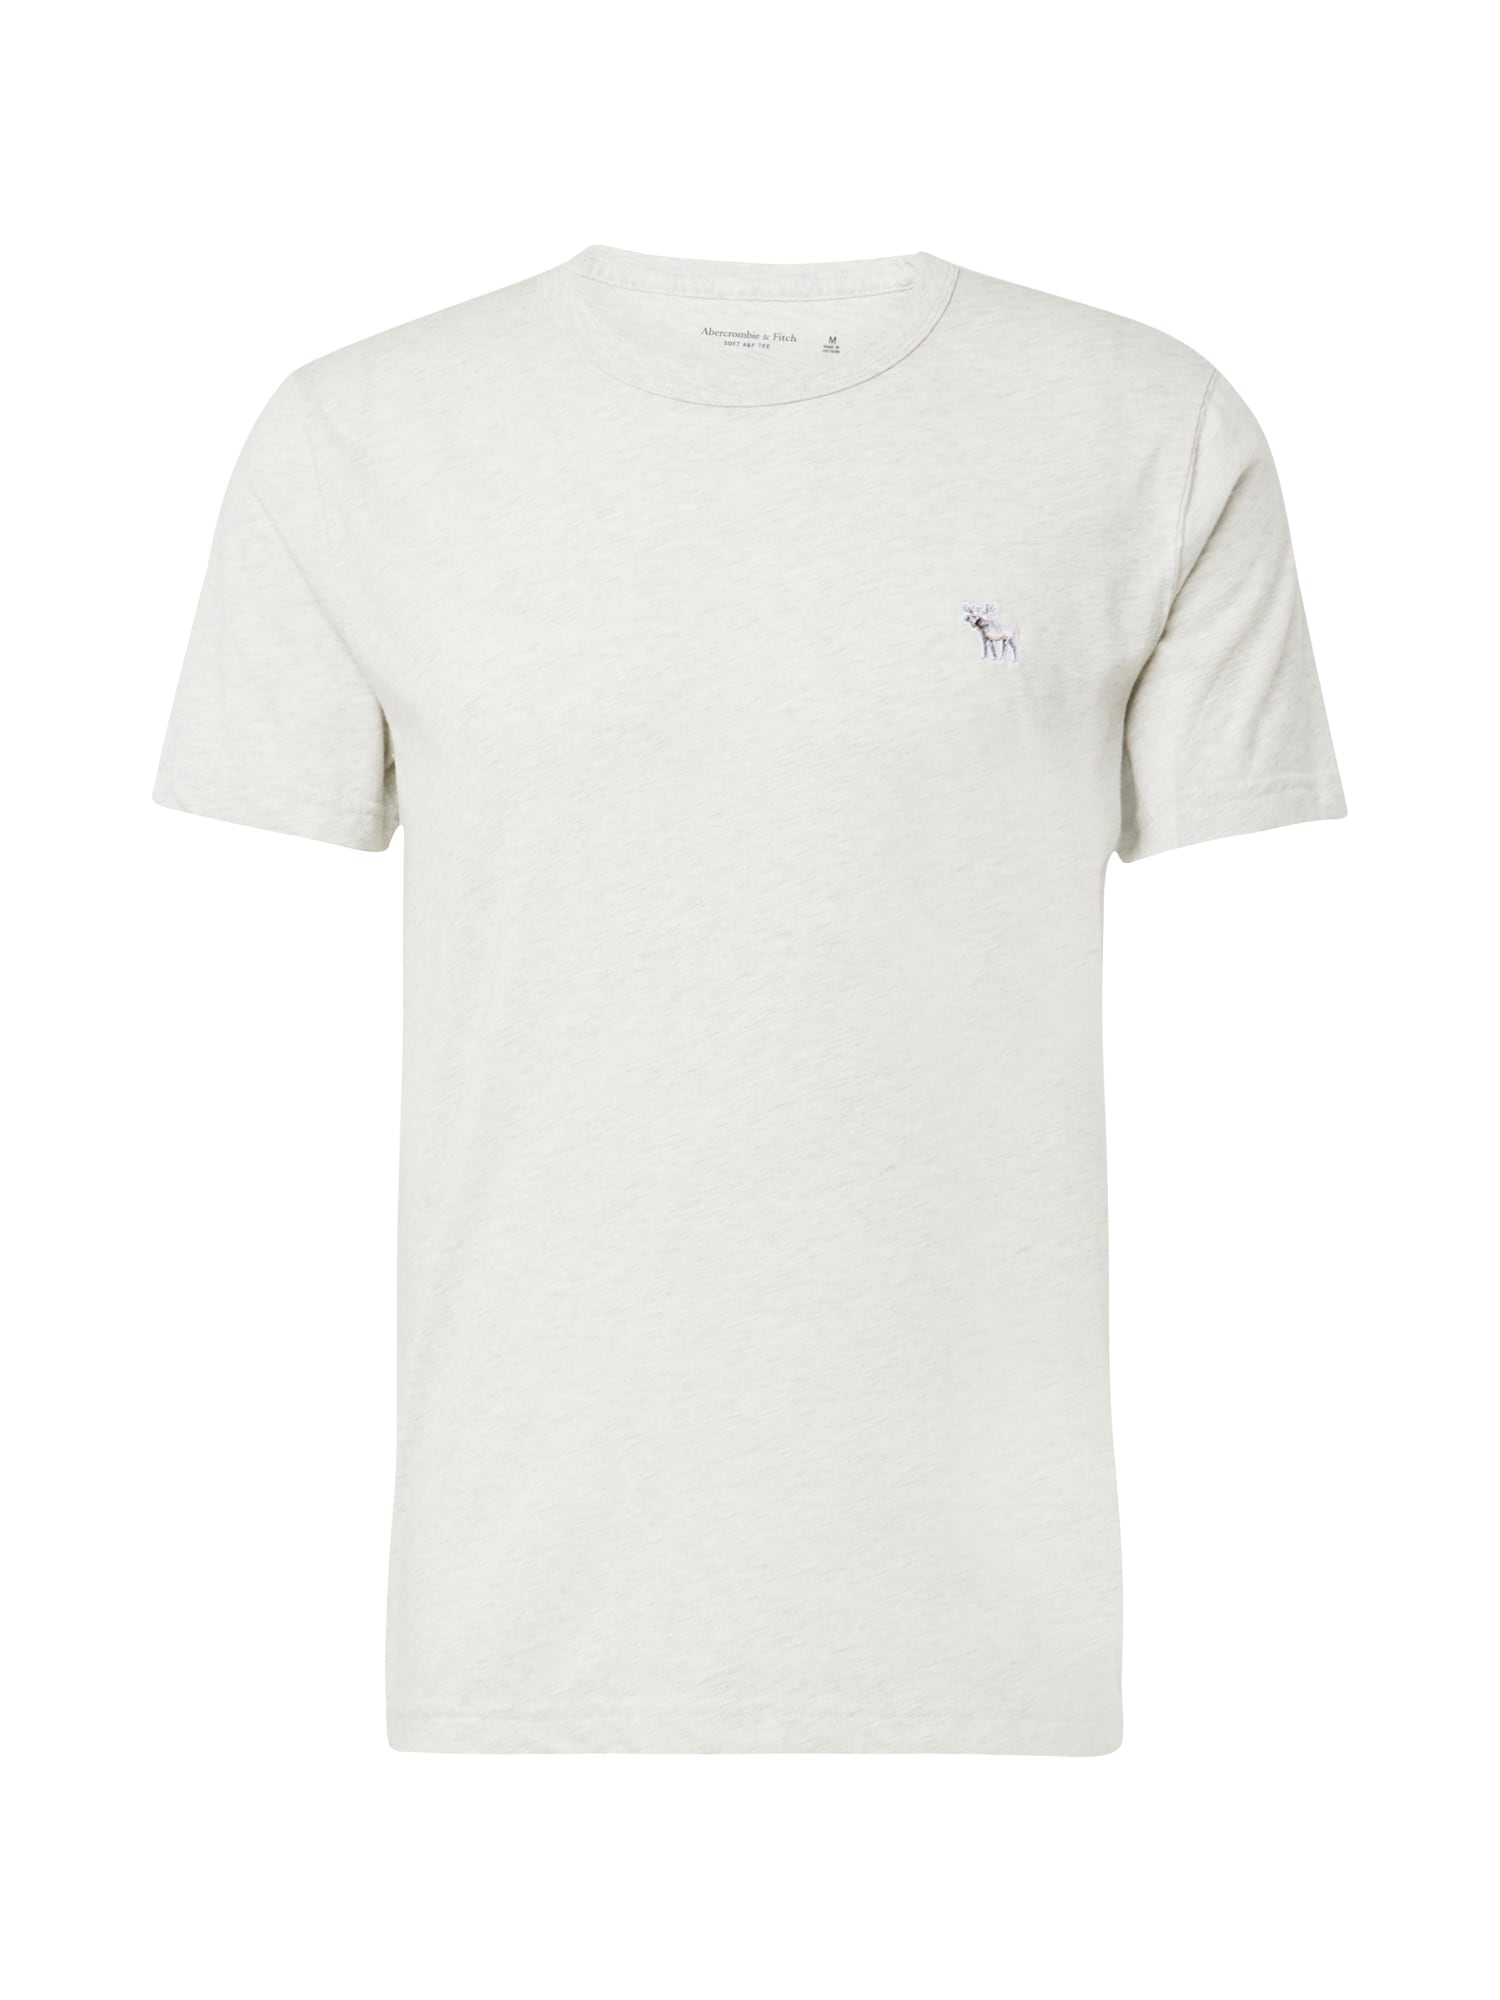 Abercrombie & Fitch Marškinėliai pilka / margai balta